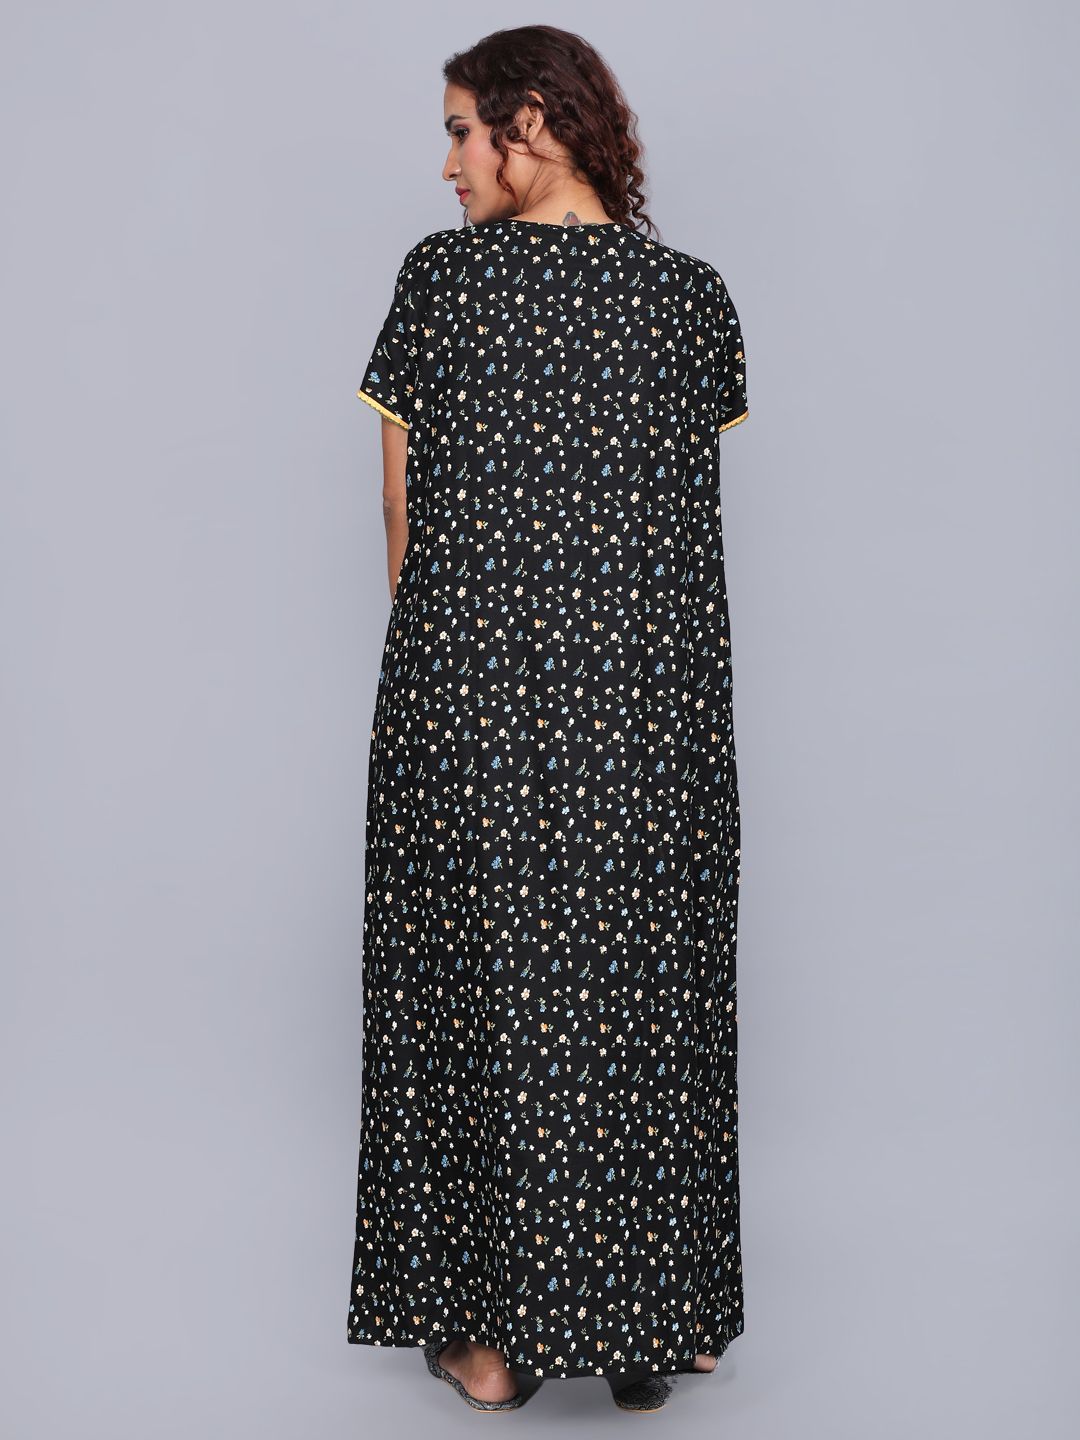 Evolove Women's 100% Viscose Printed Maxi Nightgown Long Nighty Sleepwear for Ladies Super Soft Comfortable Design  ( Black)